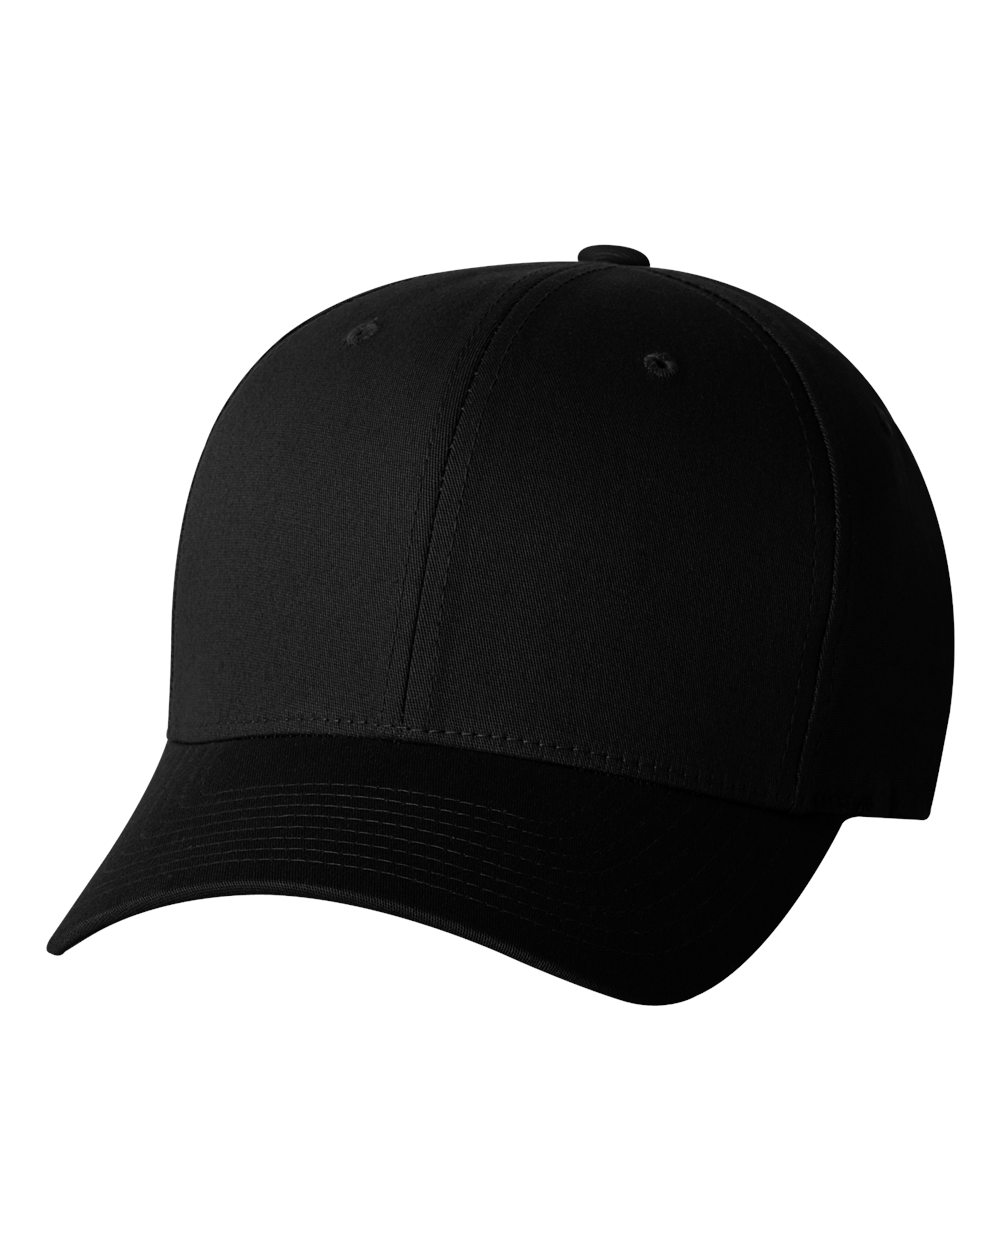 Black Baseball Hat Template